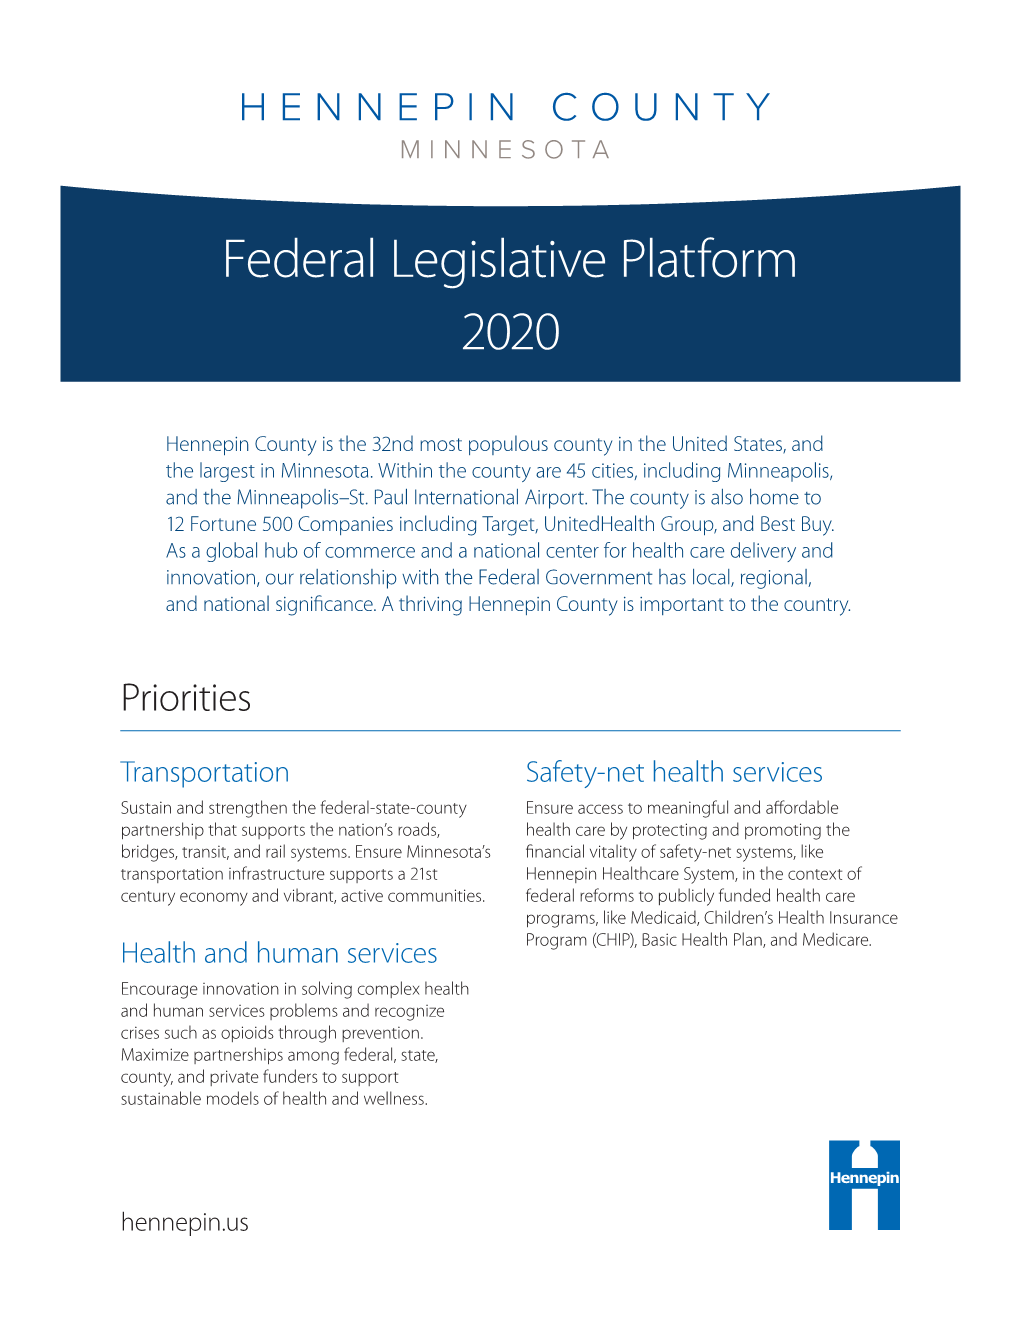 Federal Legislative Platform 2020